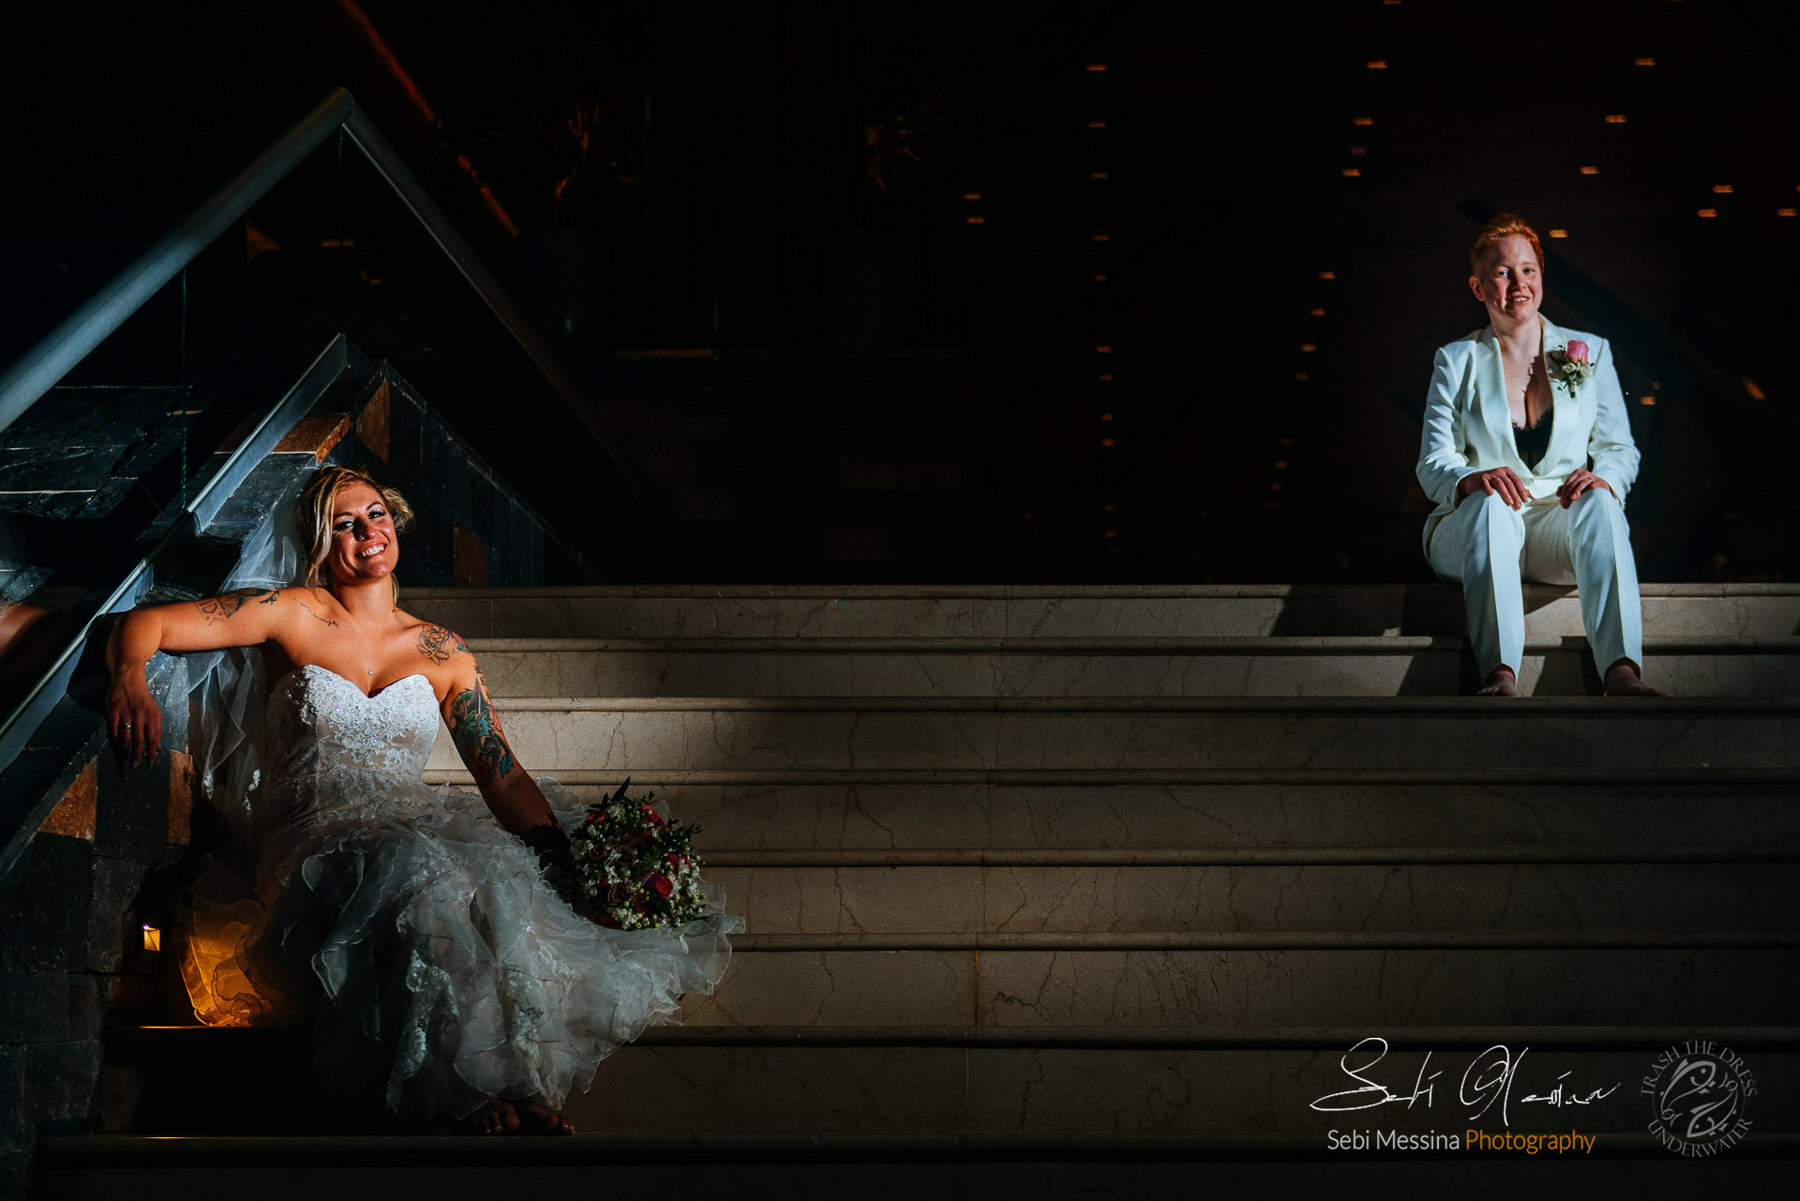 Lgtb wedding in Mexico - Sebi Messina Photography